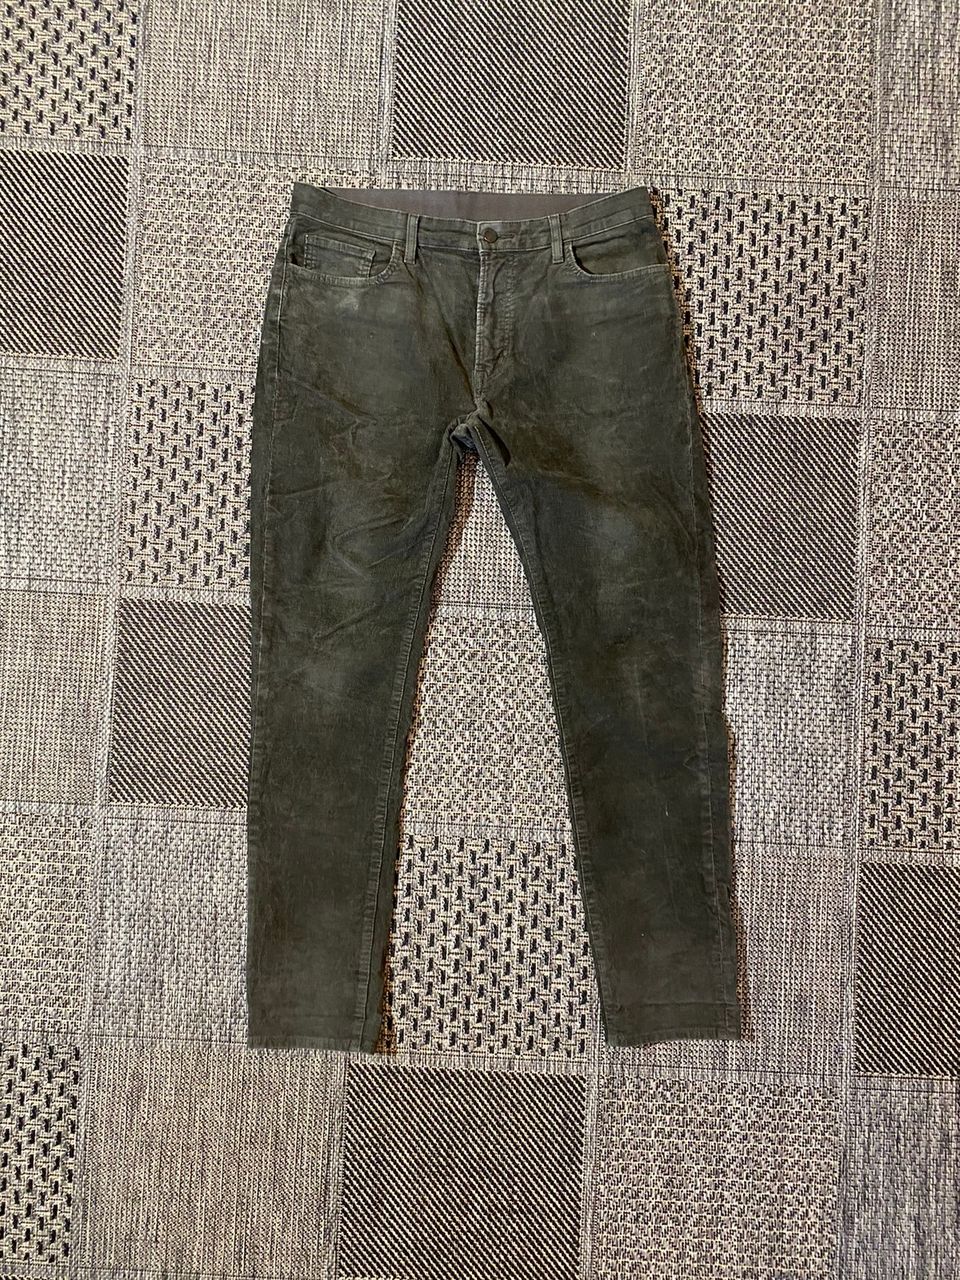 UNIQLO mens 34/34 L stretch corduroy jeans cut pants tobacco green